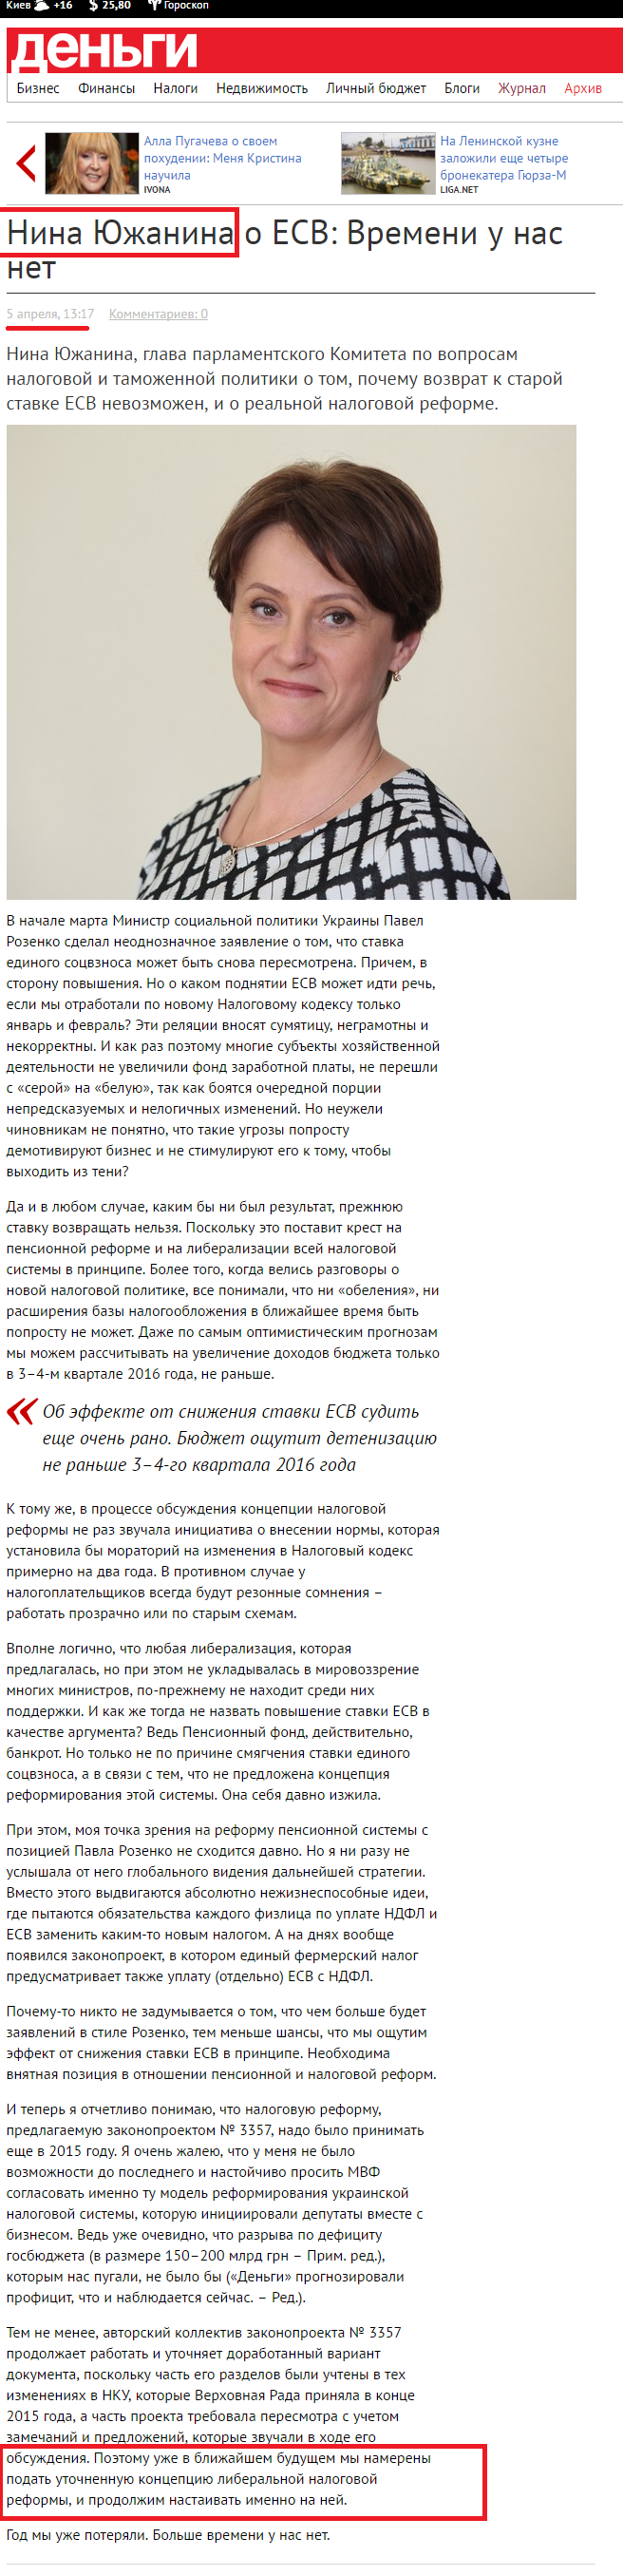 http://dengi.ua/archive/articles/284044-Nina-Juzhanina-o-ESV--Vremeni-u-nas-net